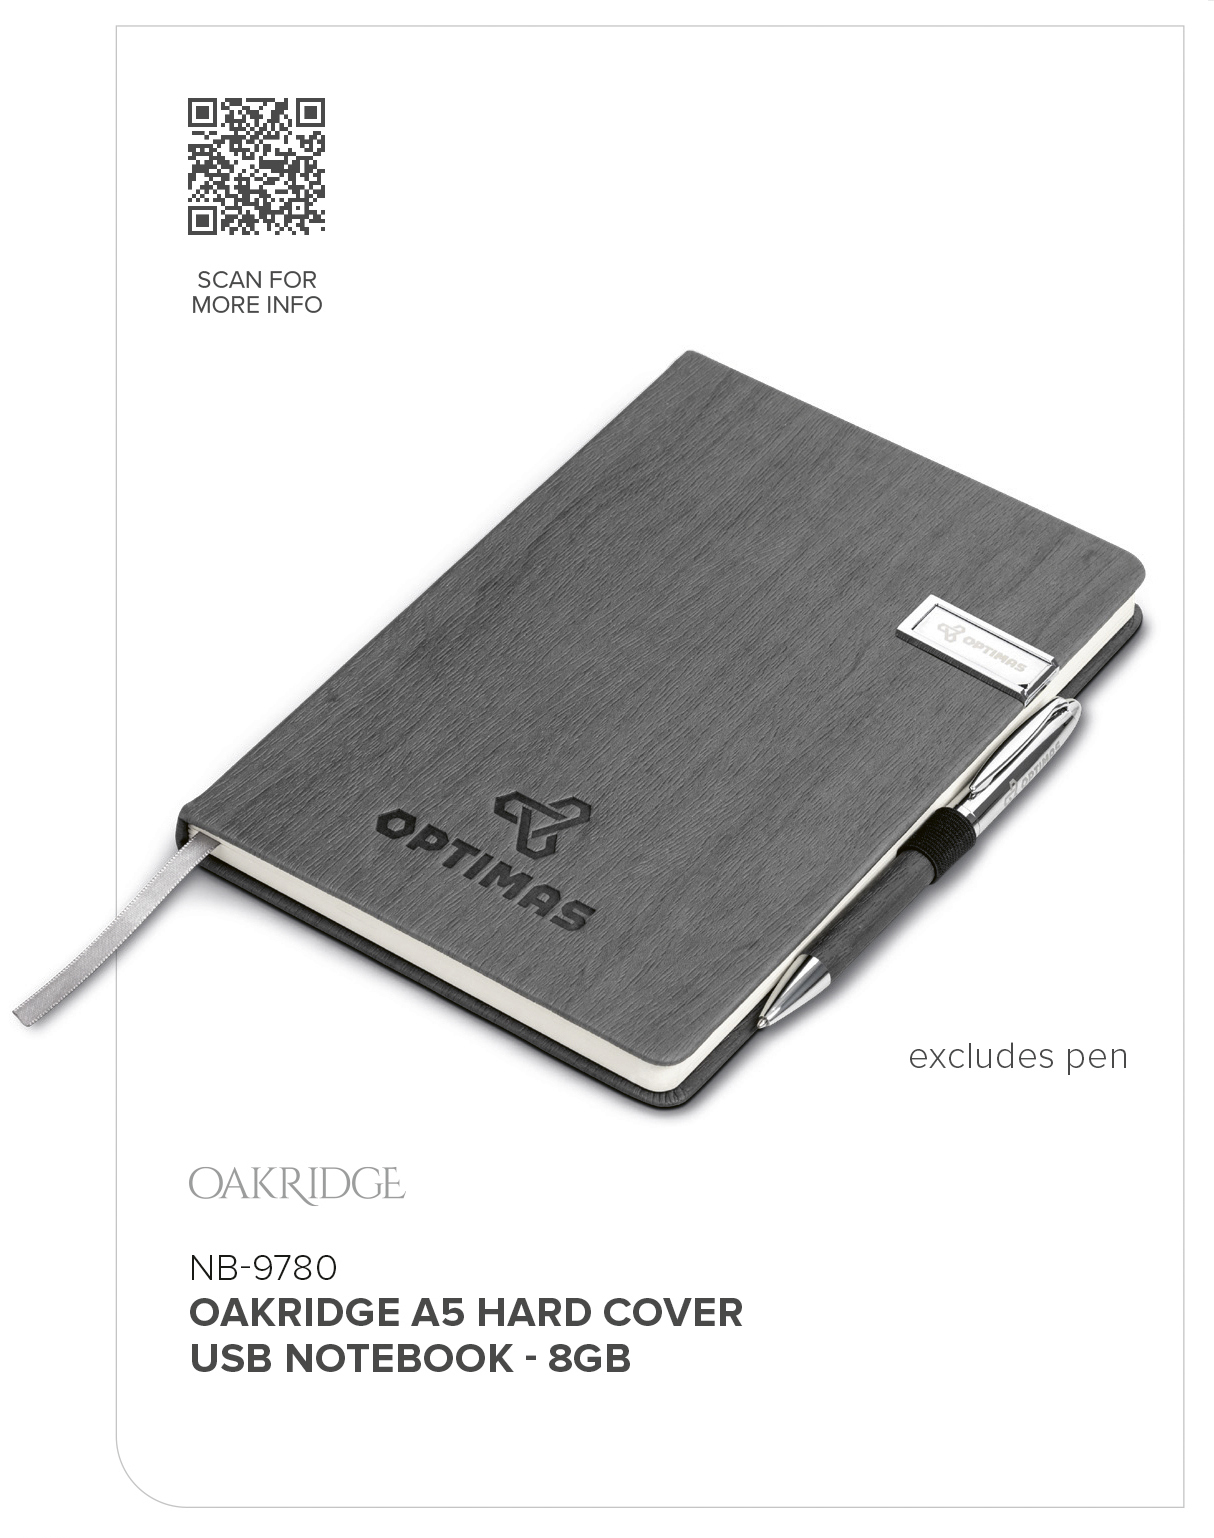 NB-9780 - Oakridge A5 Hard Cover USB Notebook - 8GB - Catalogue Image